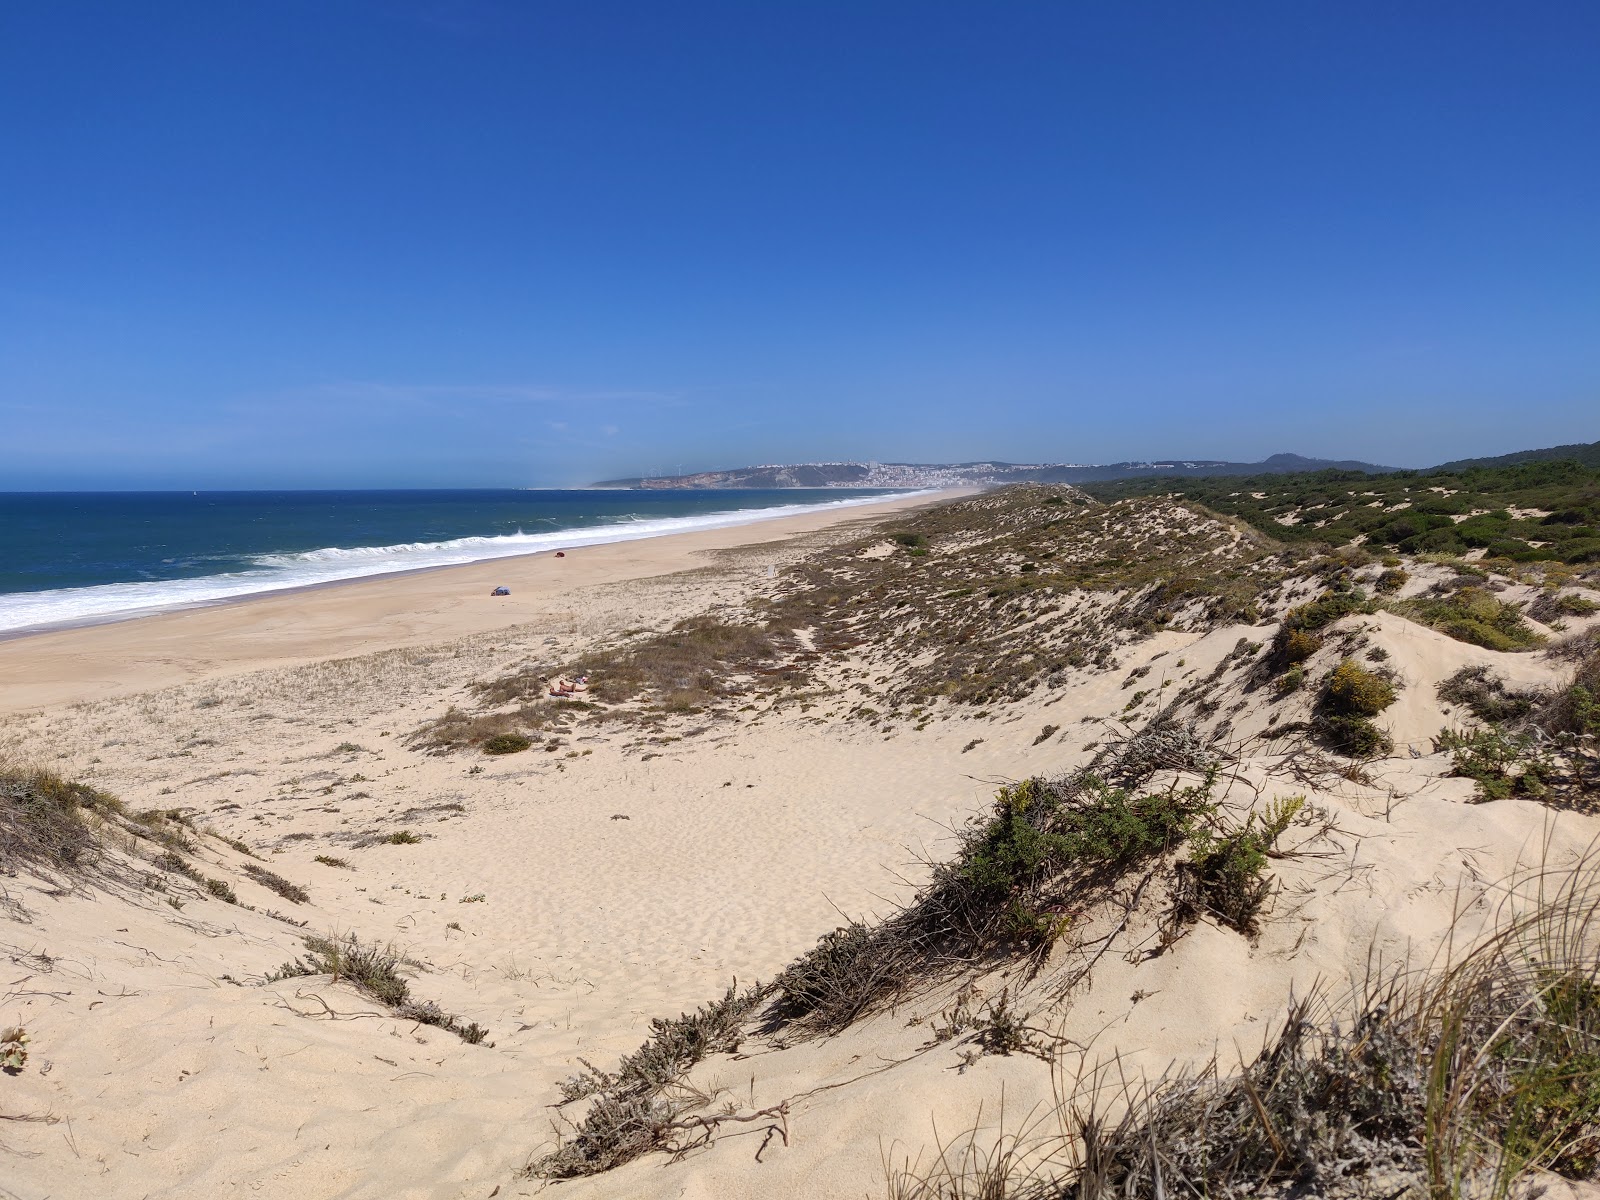 Photo of Praia do Salgado with turquoise water surface